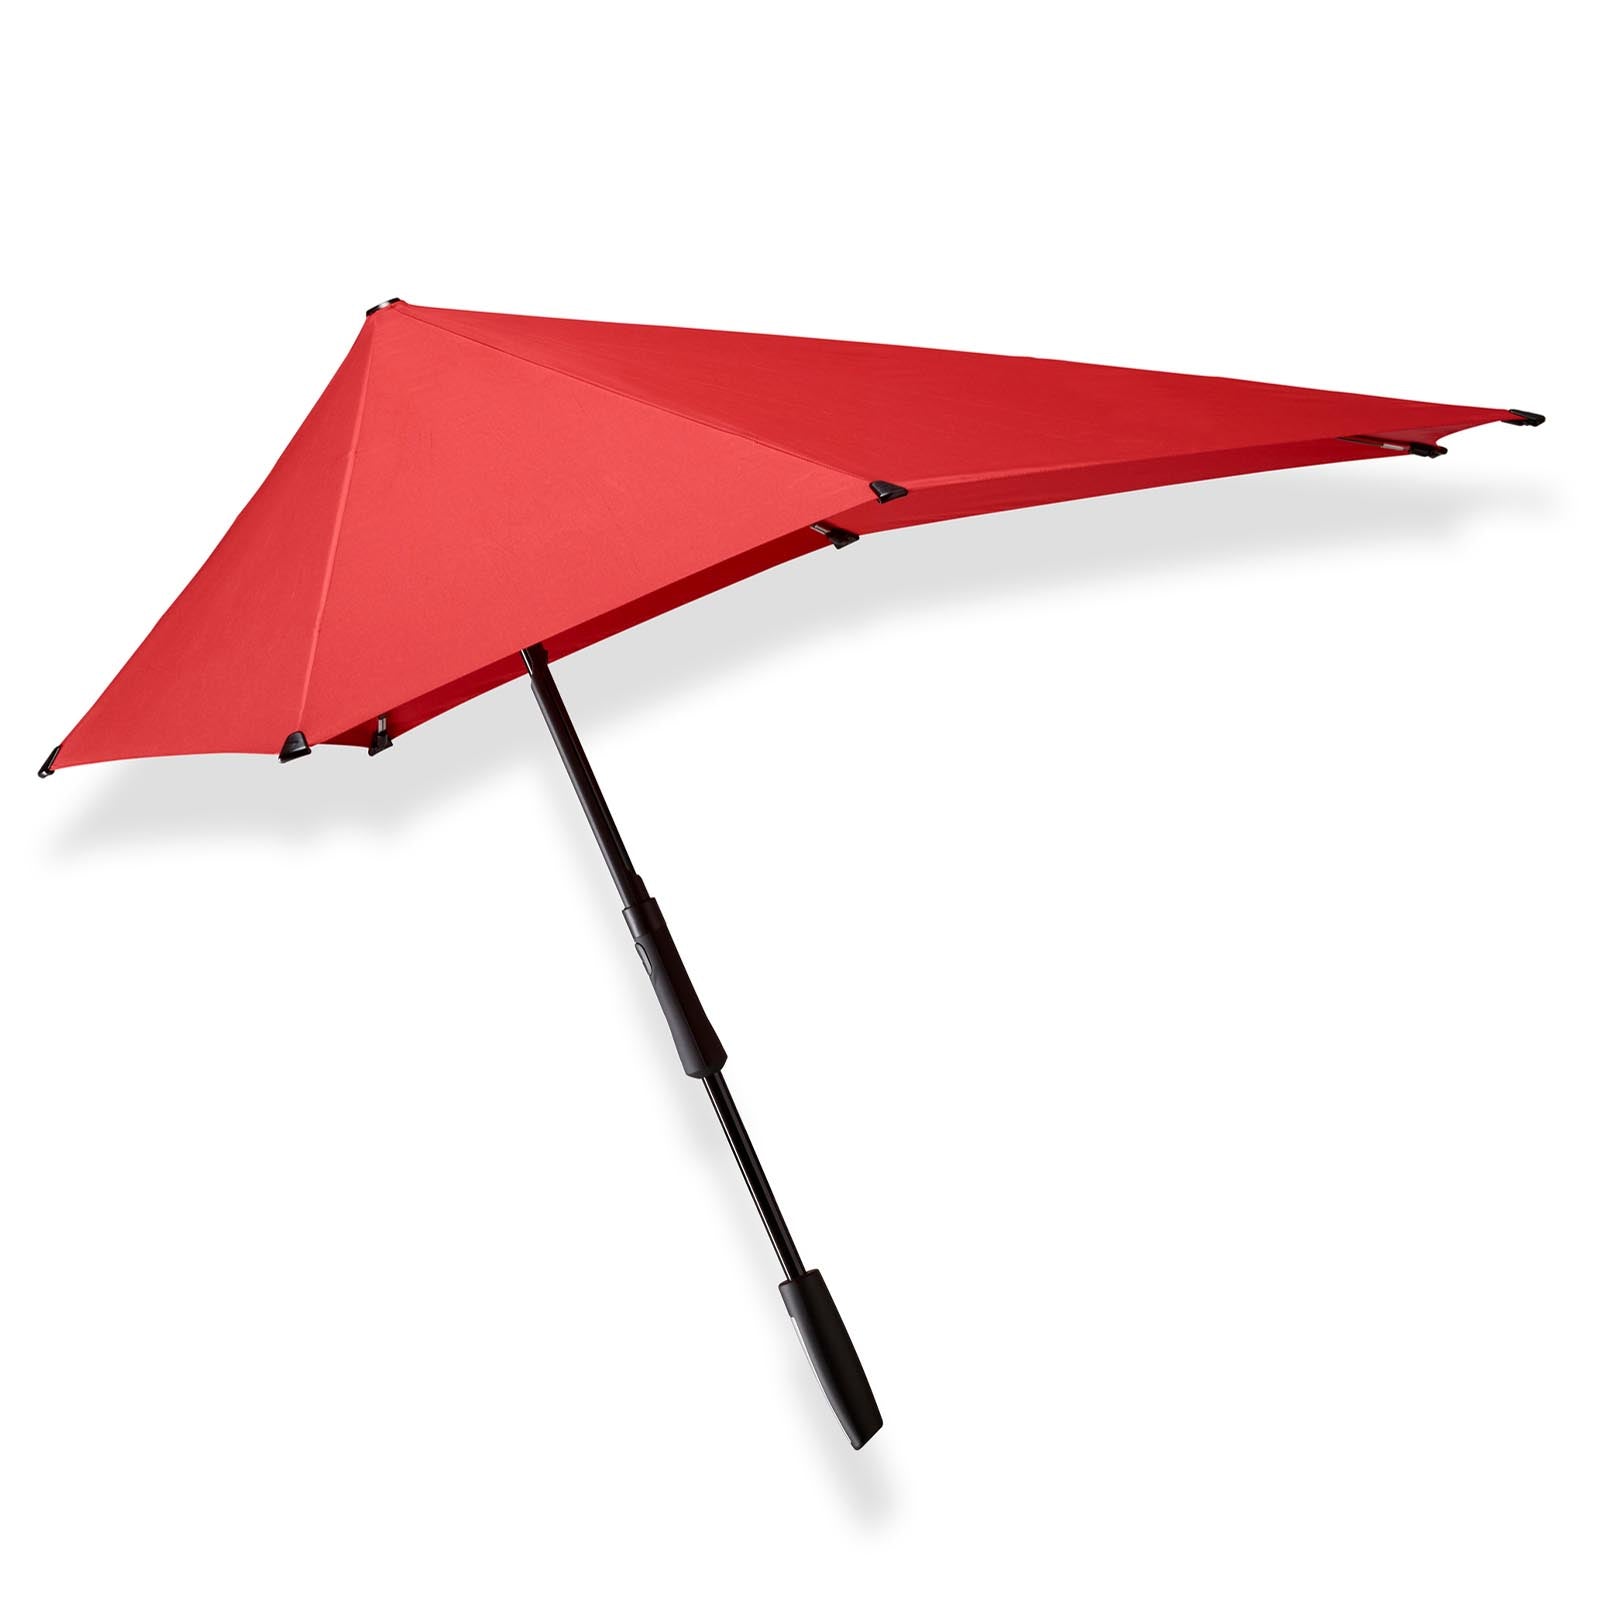 Senz Storm Paraplu Large│Passion Red│Senz Umbrella│product foto open zijkant